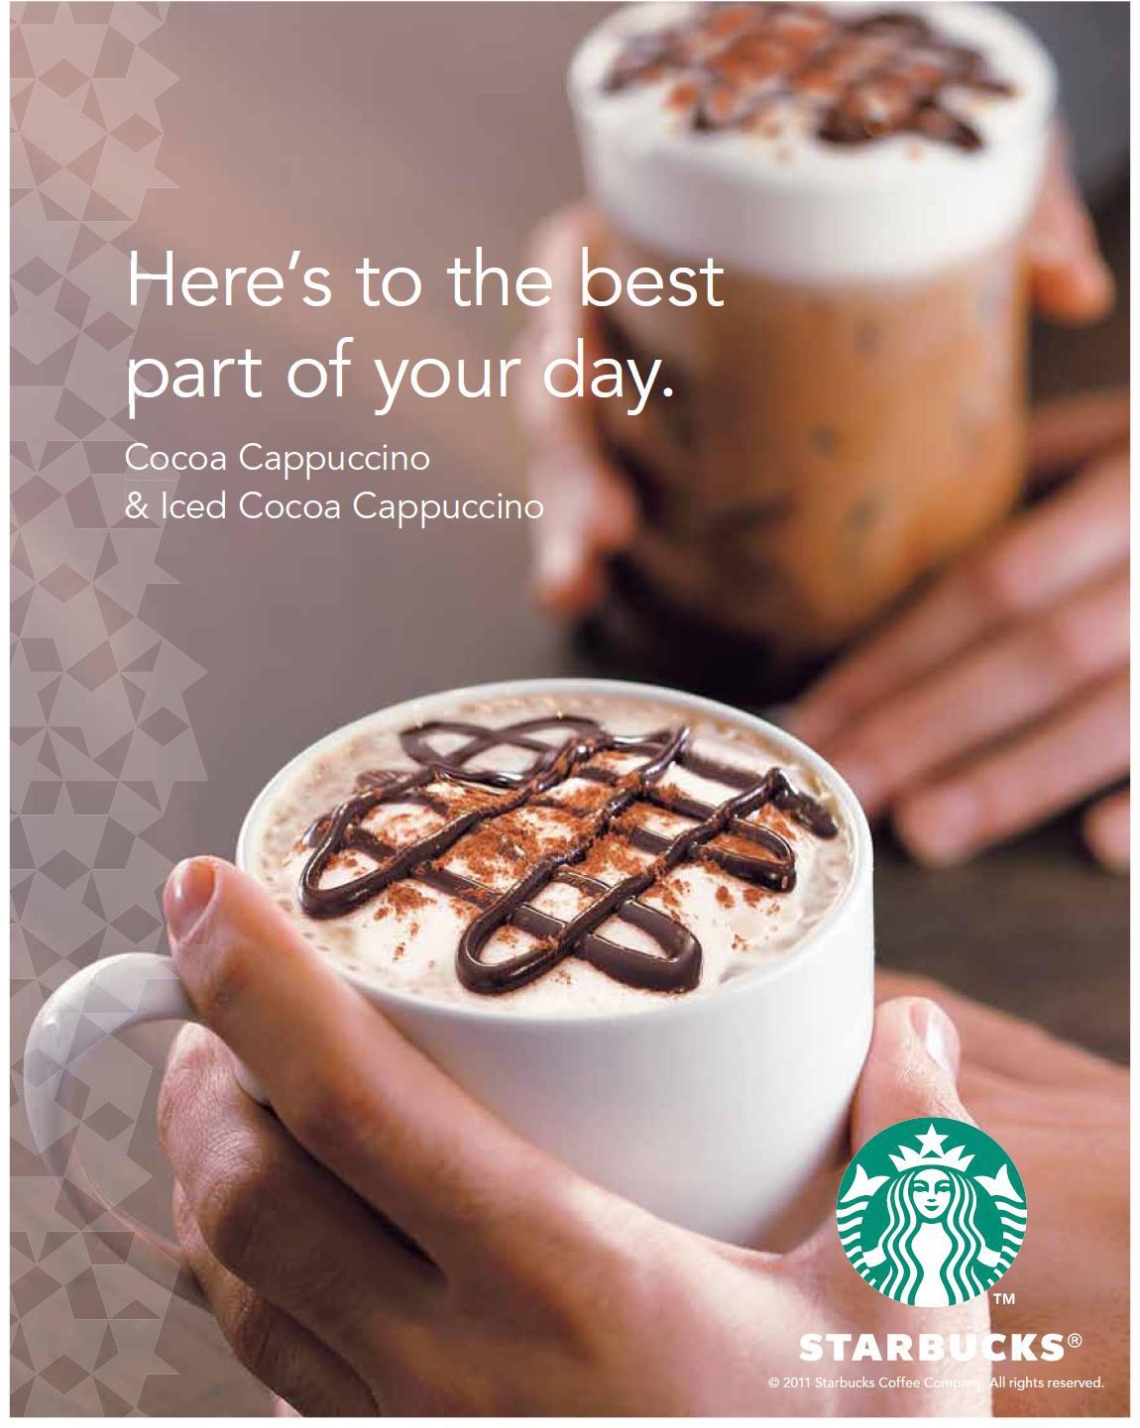 coffee-starbucks-ad-cocoa-cappuccino-iced-cocoa-cappuccino-01-with-text-of-ad-792821.jpg